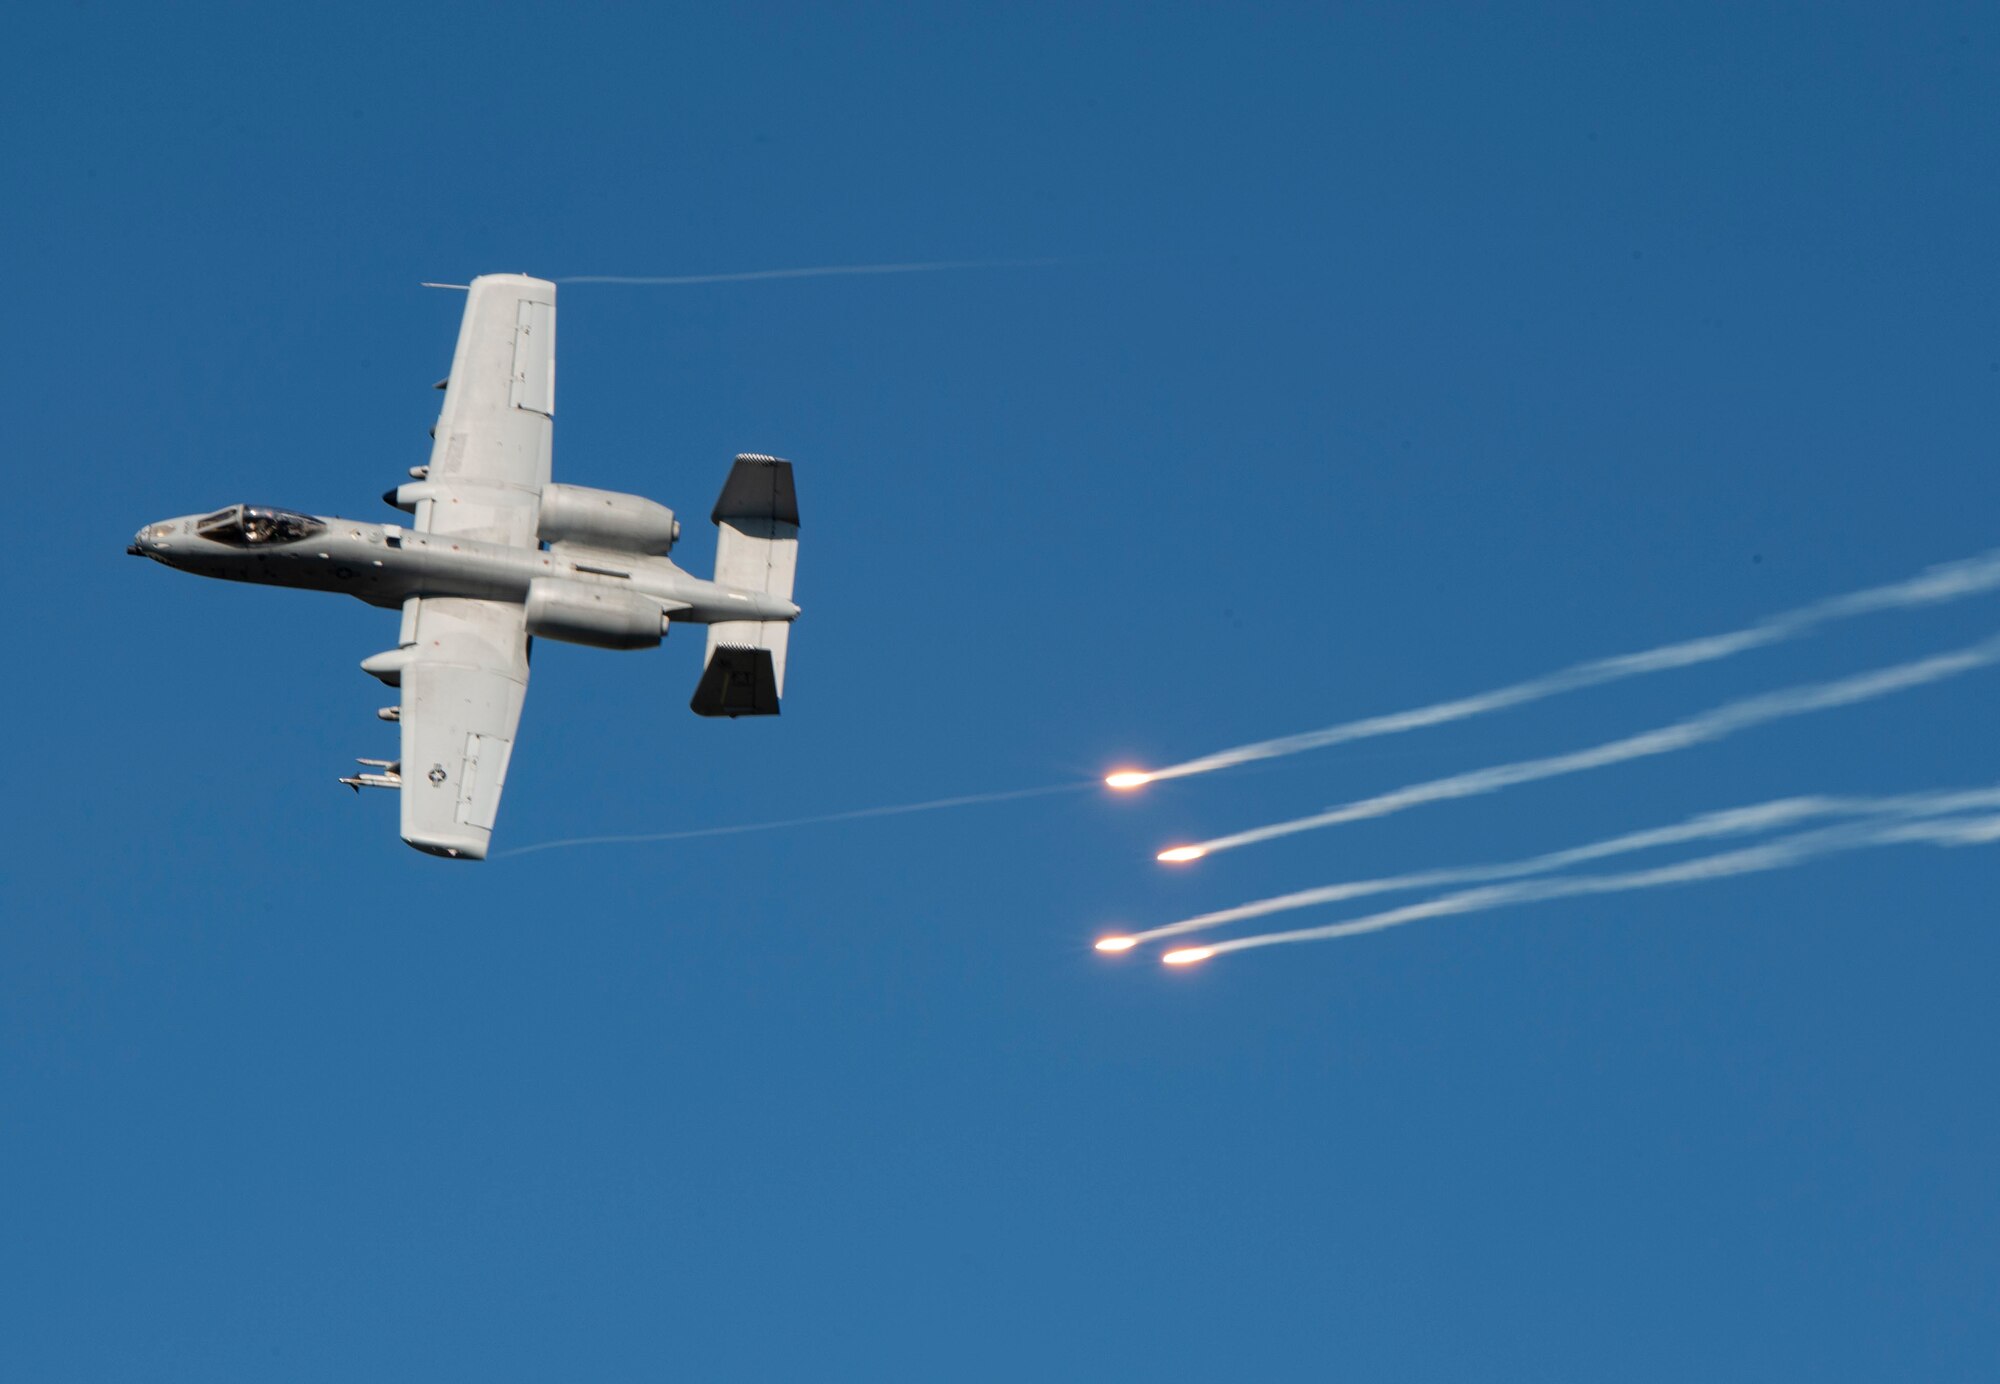 A-10 aircraft shooting flares